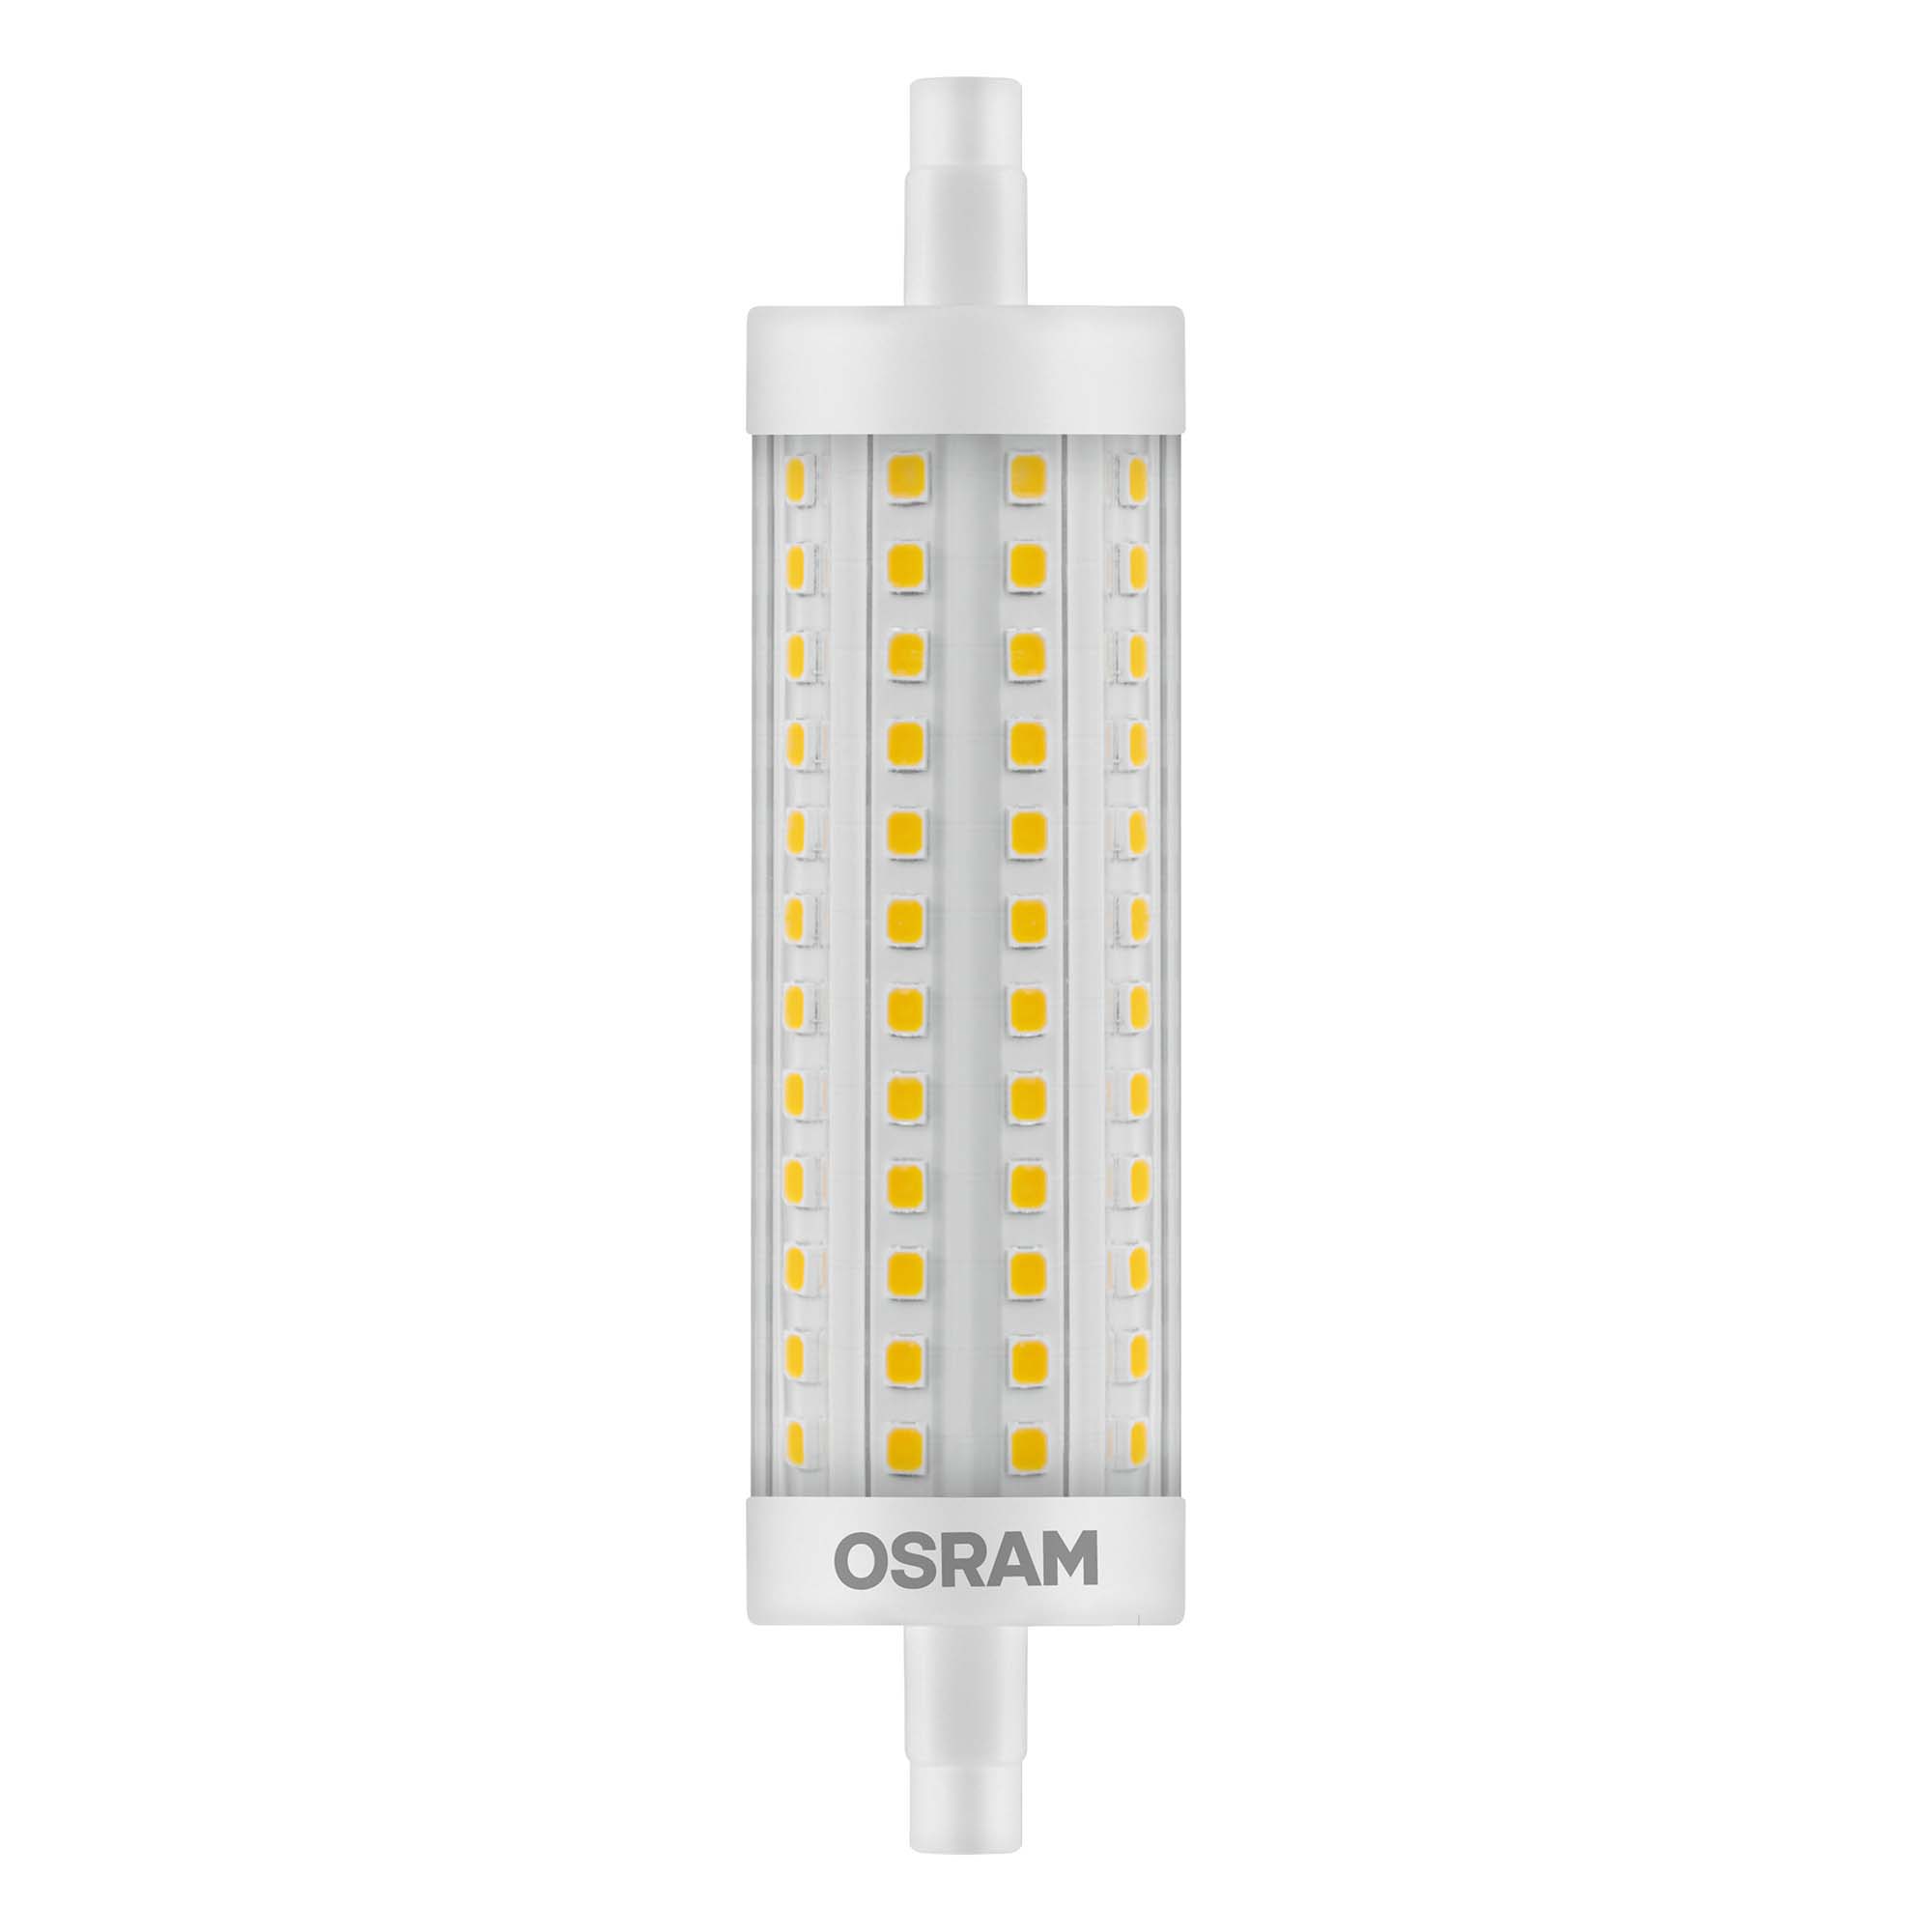 Osram LED STAR  LINE 118  HS 100 non-dim  12,5W 827 R7S 118mm 1521lm 2700K